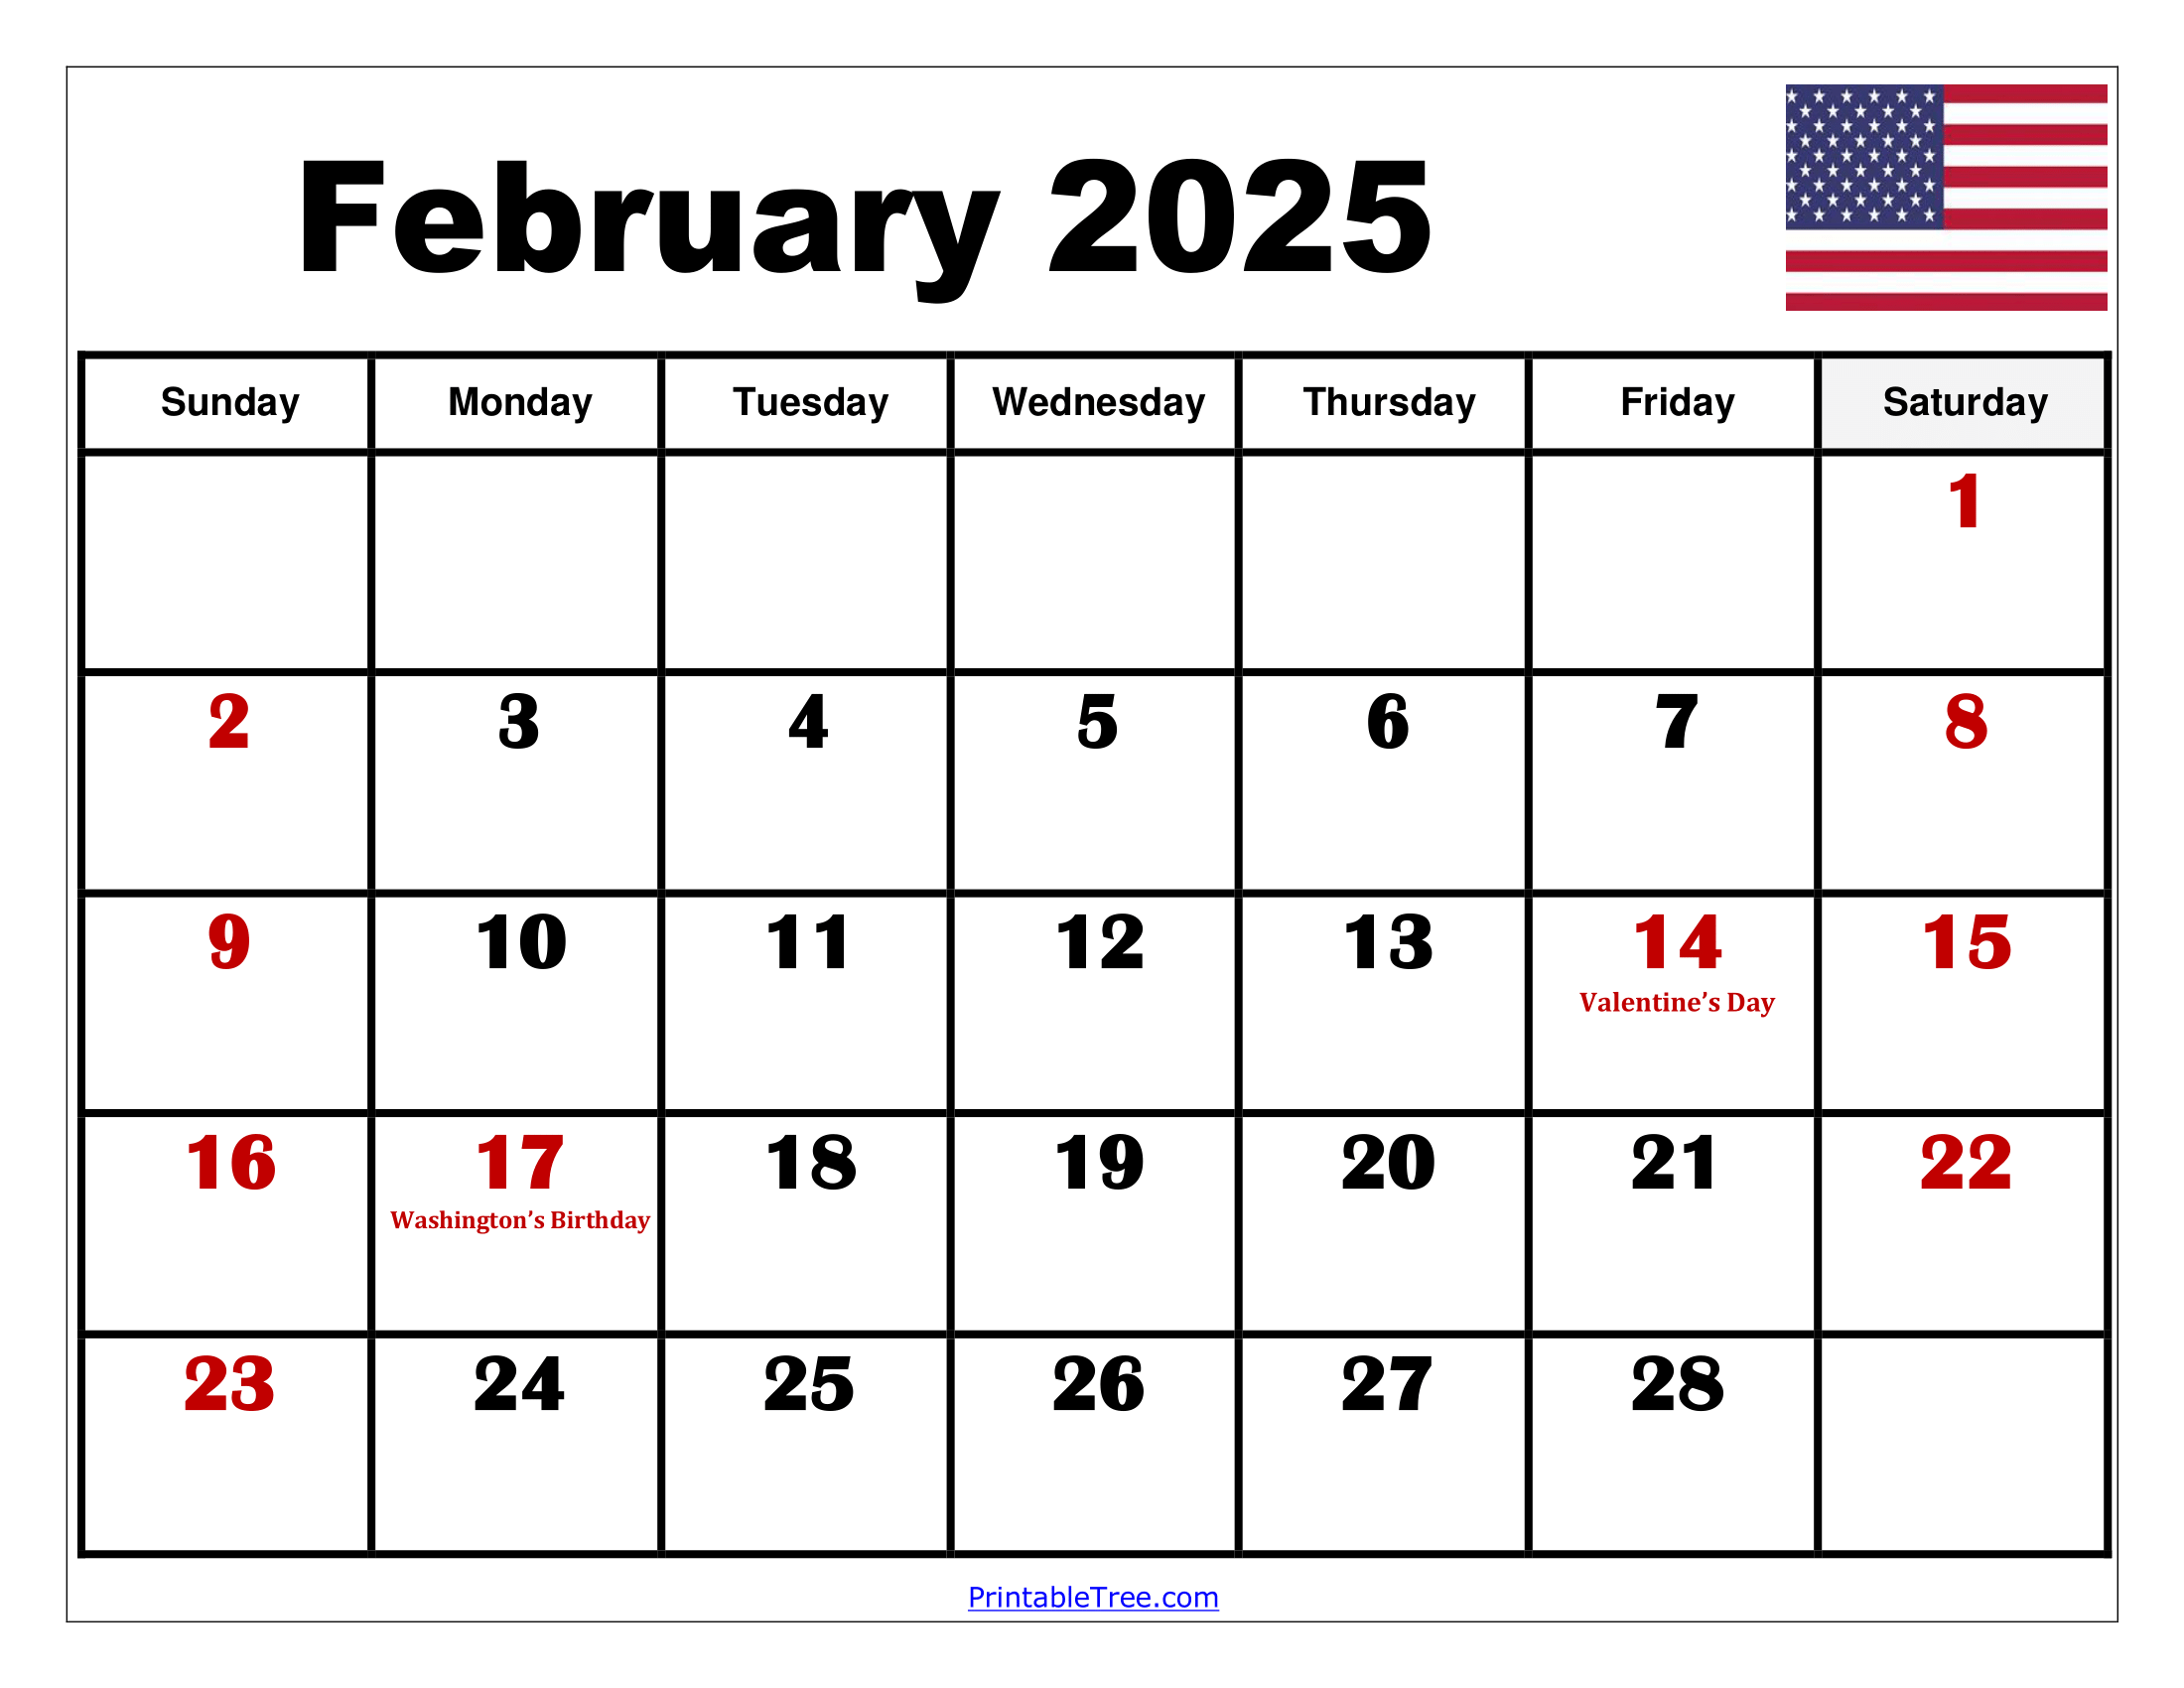 February calendar printable pdf template with holidays